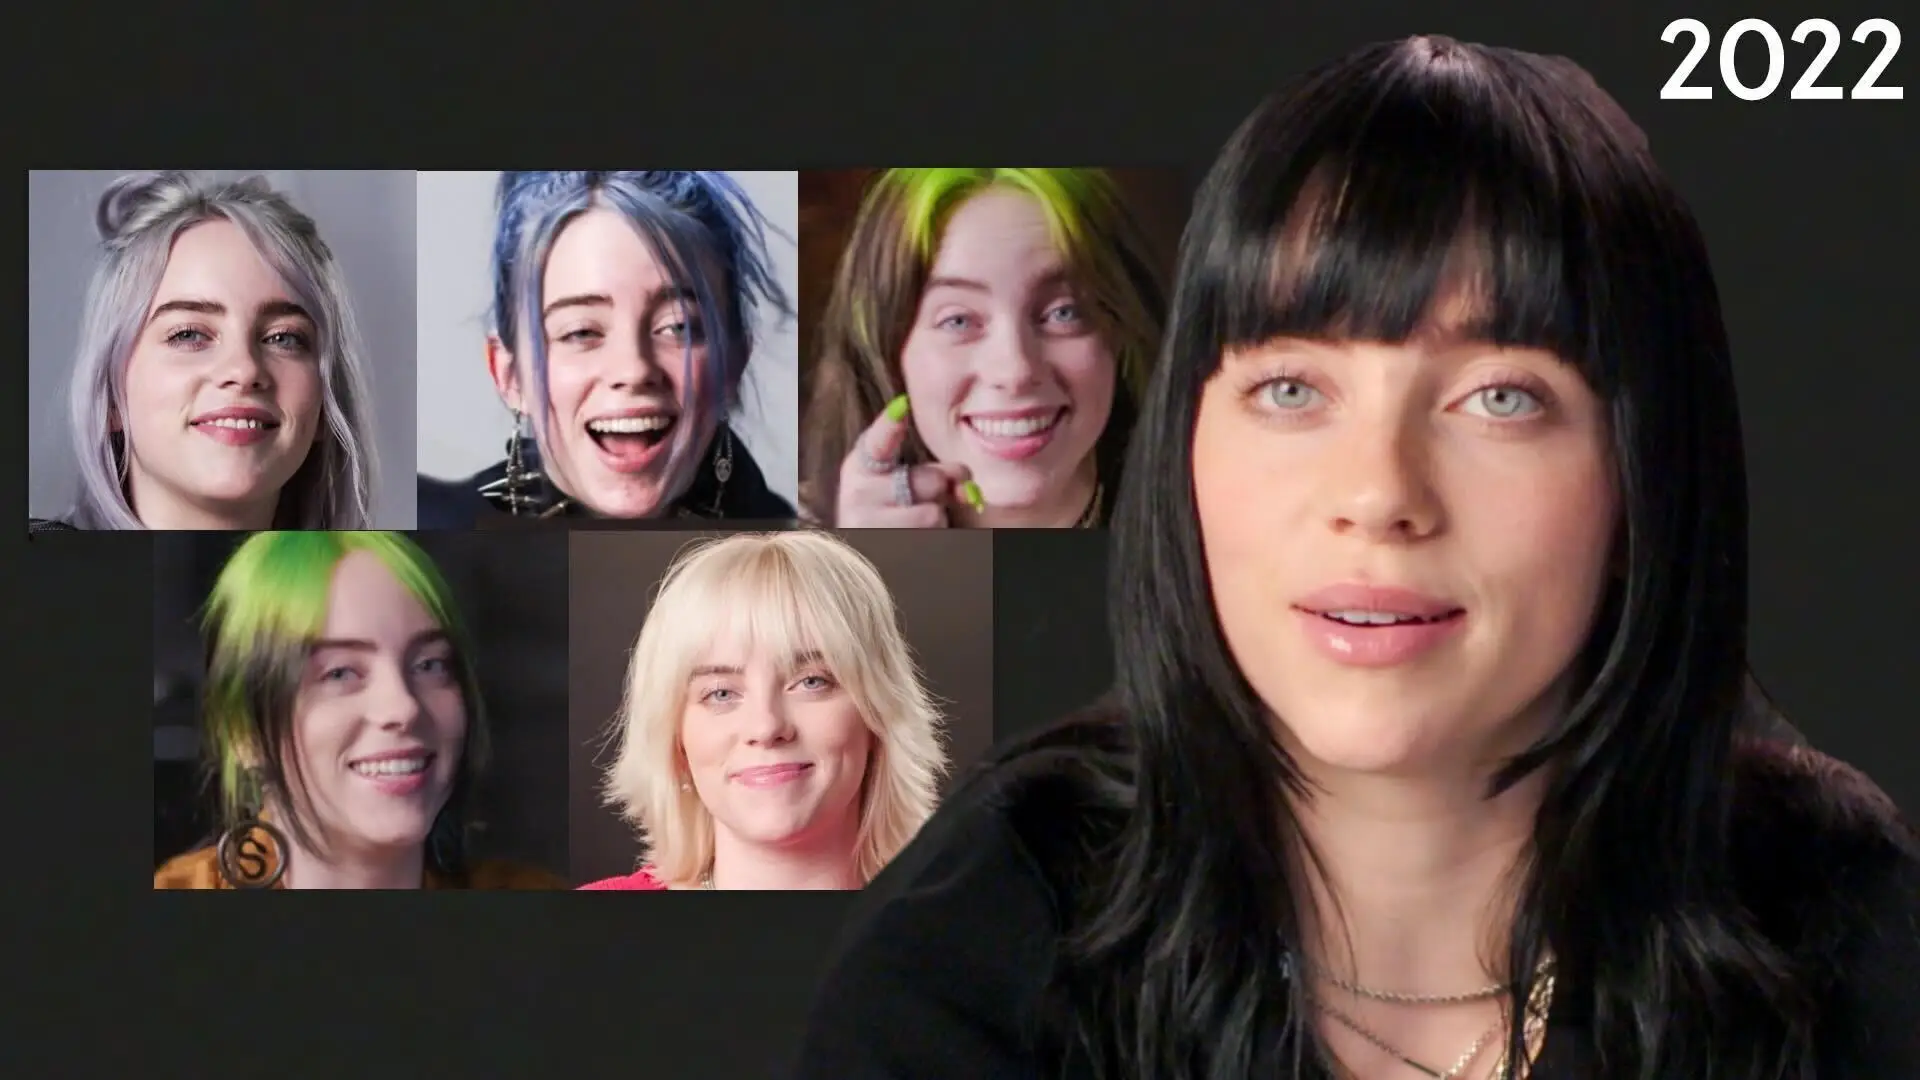 Nos últimos seis anos, Billie Eilish deu a mesma entrevista à “Vanity Fair”: aí está o vídeo de 2022